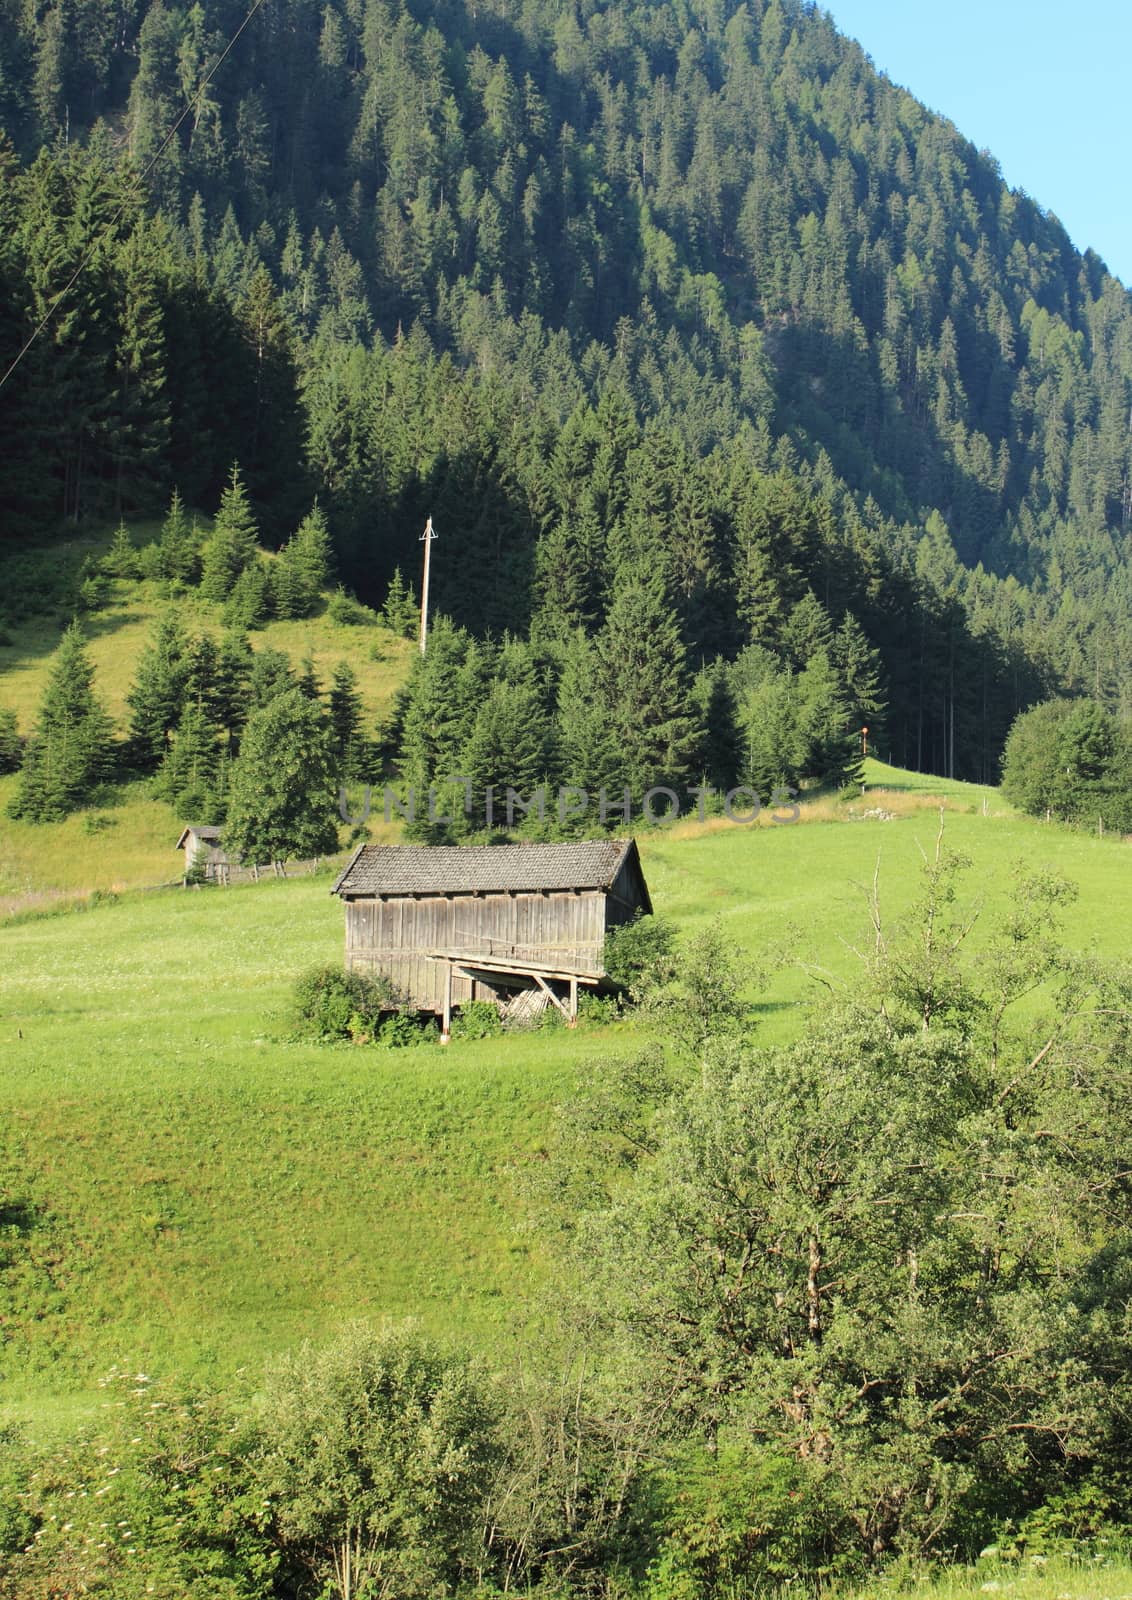 Small shack in hay field on hillside in the Alpes